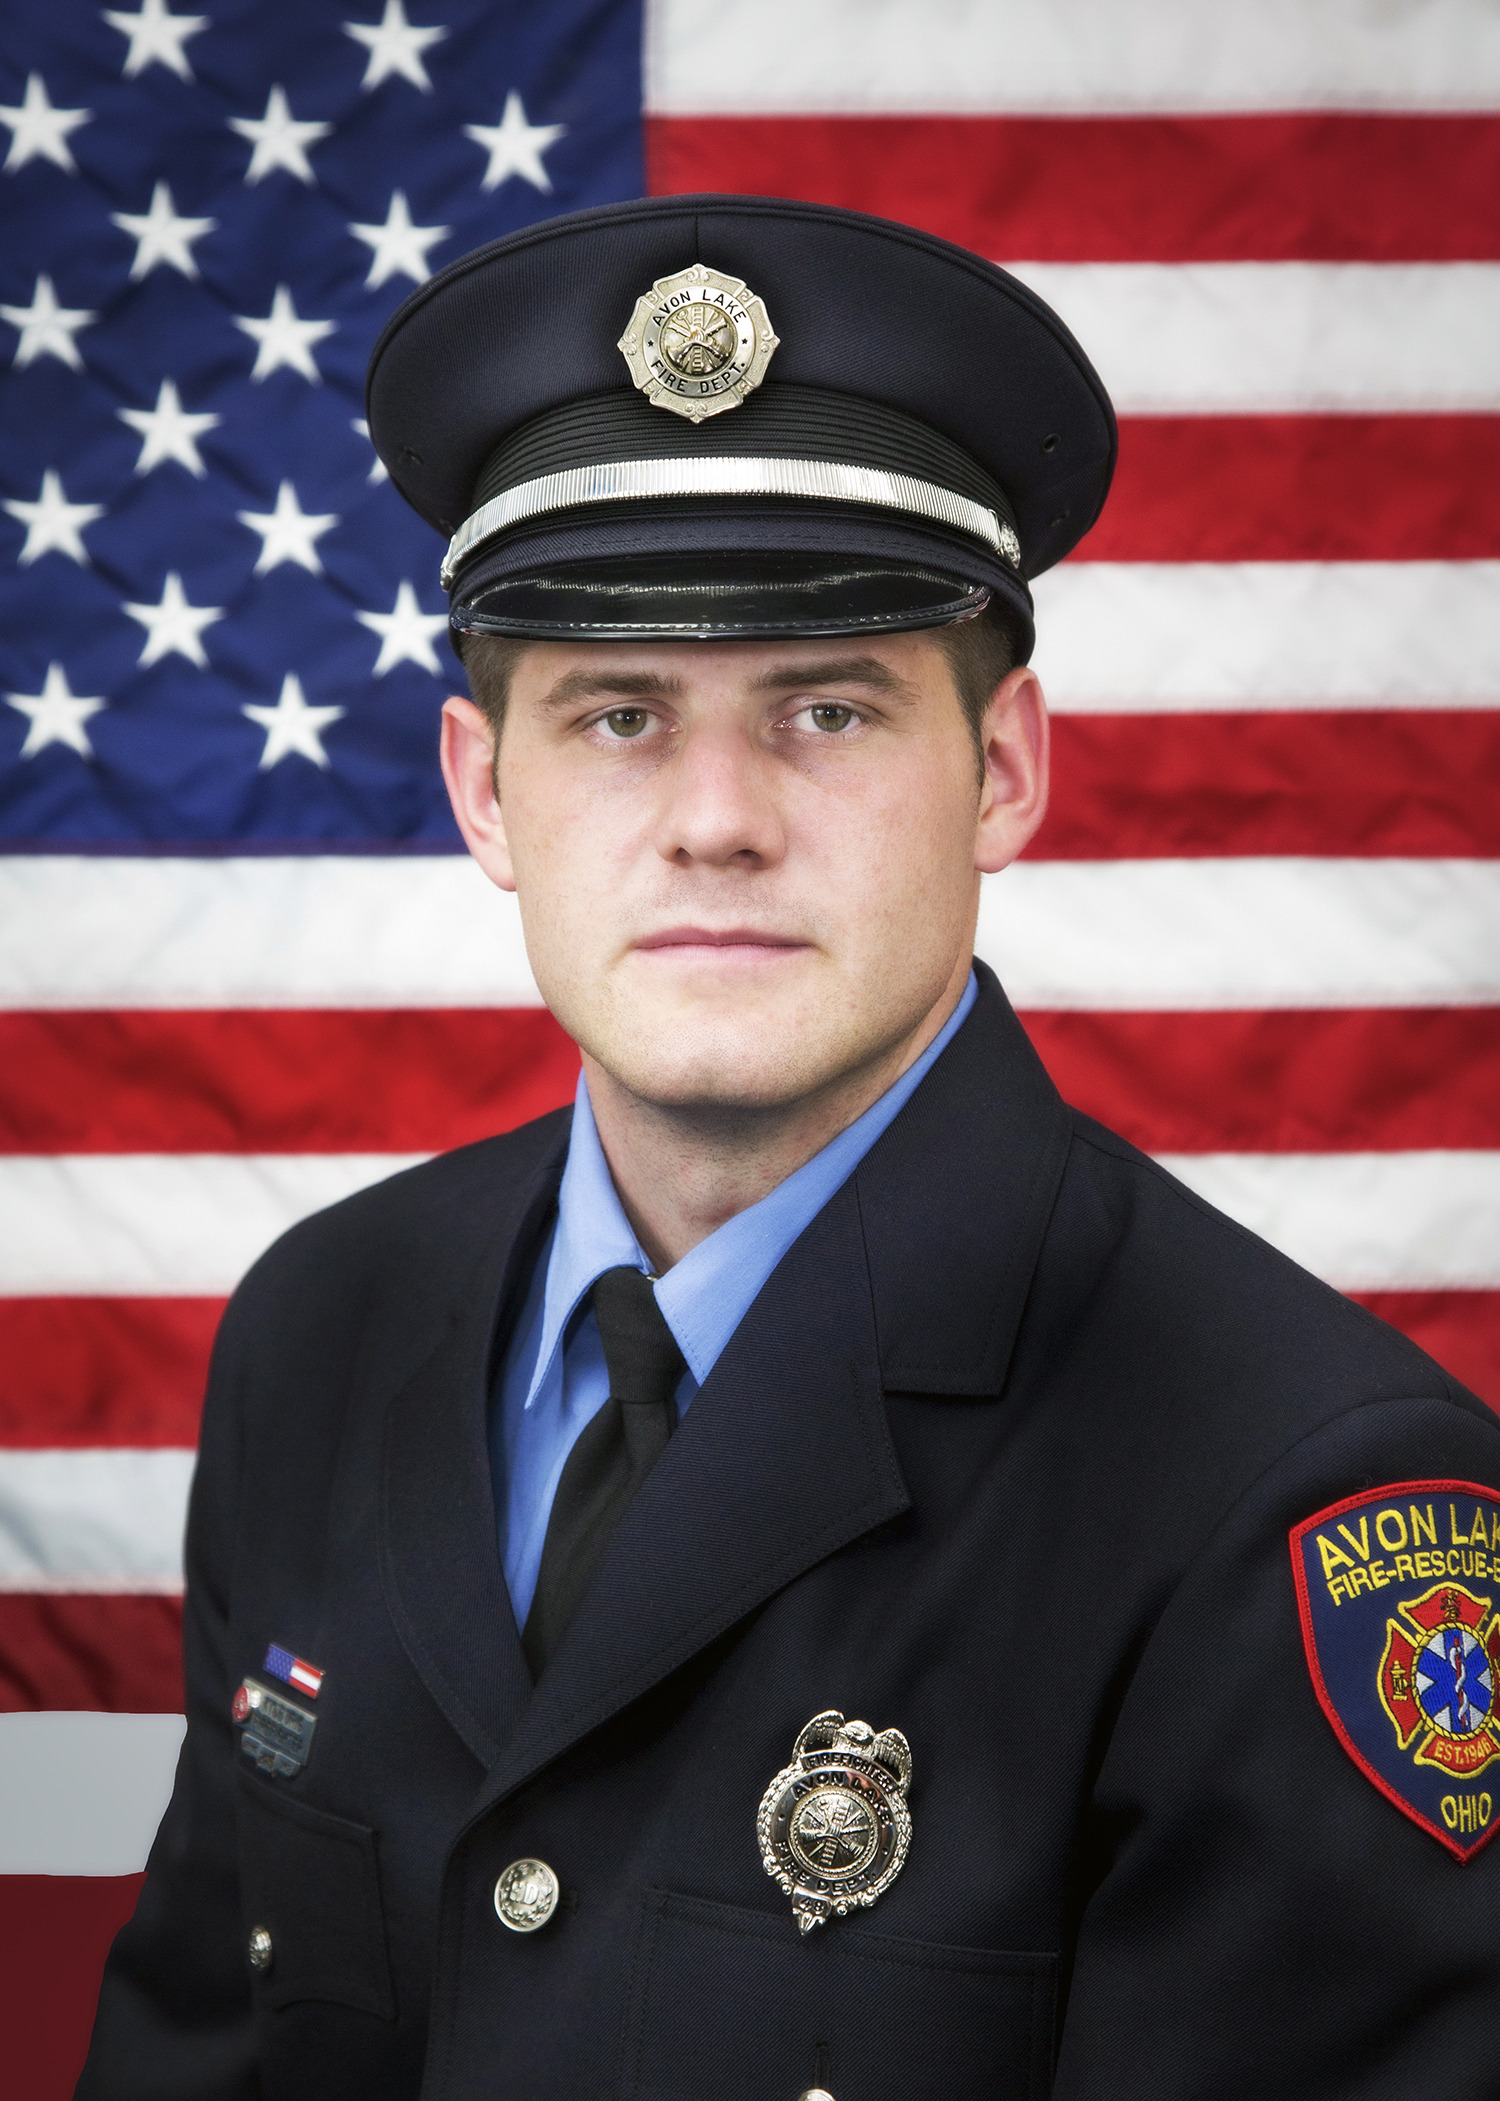 Firefighter/Paramedic Kyle Urig